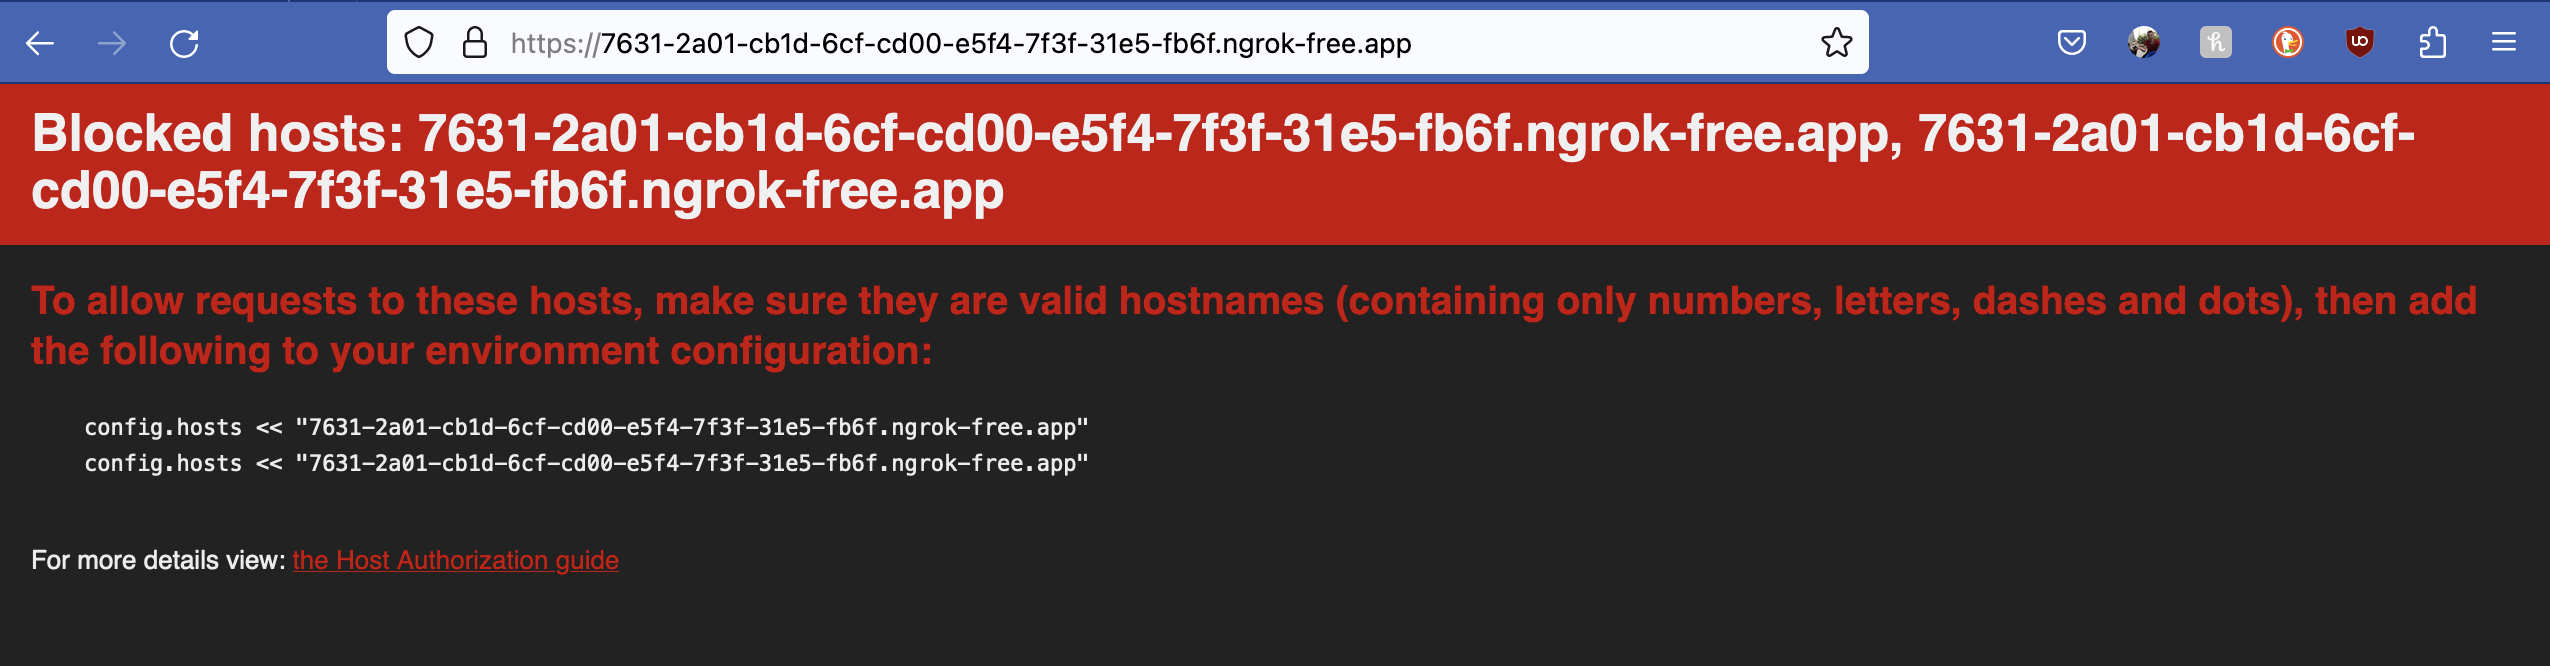 Rails blocked hosts error